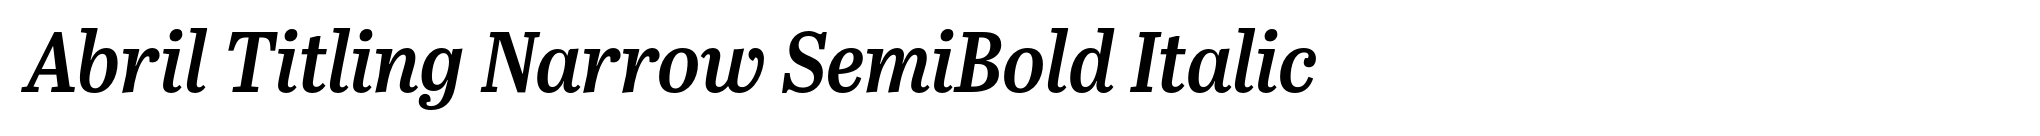 Abril Titling Narrow SemiBold Italic image